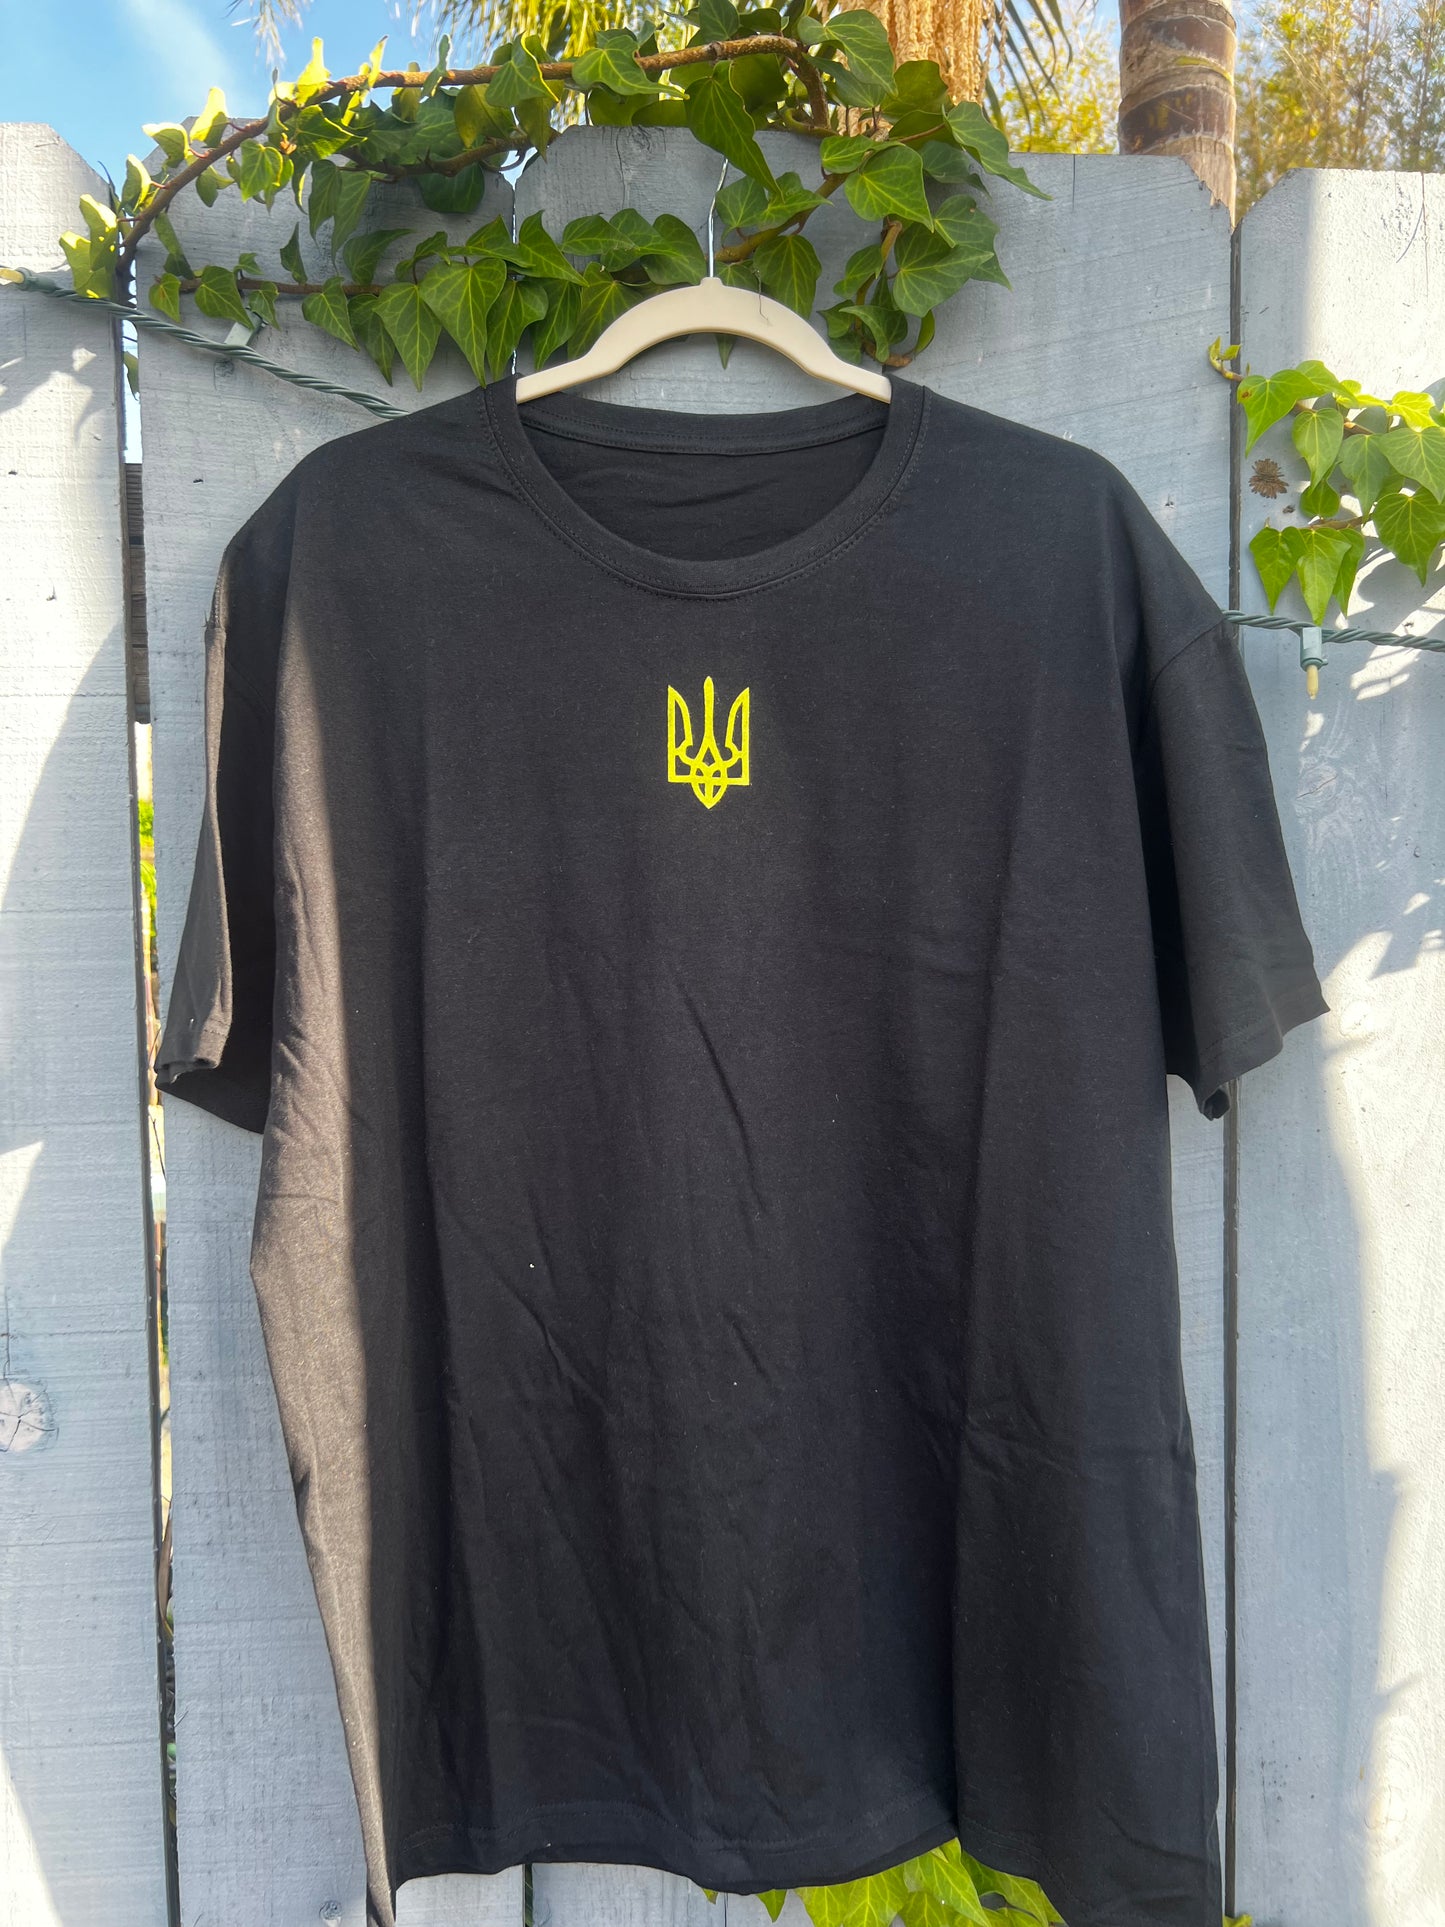 Ukrainian shirt